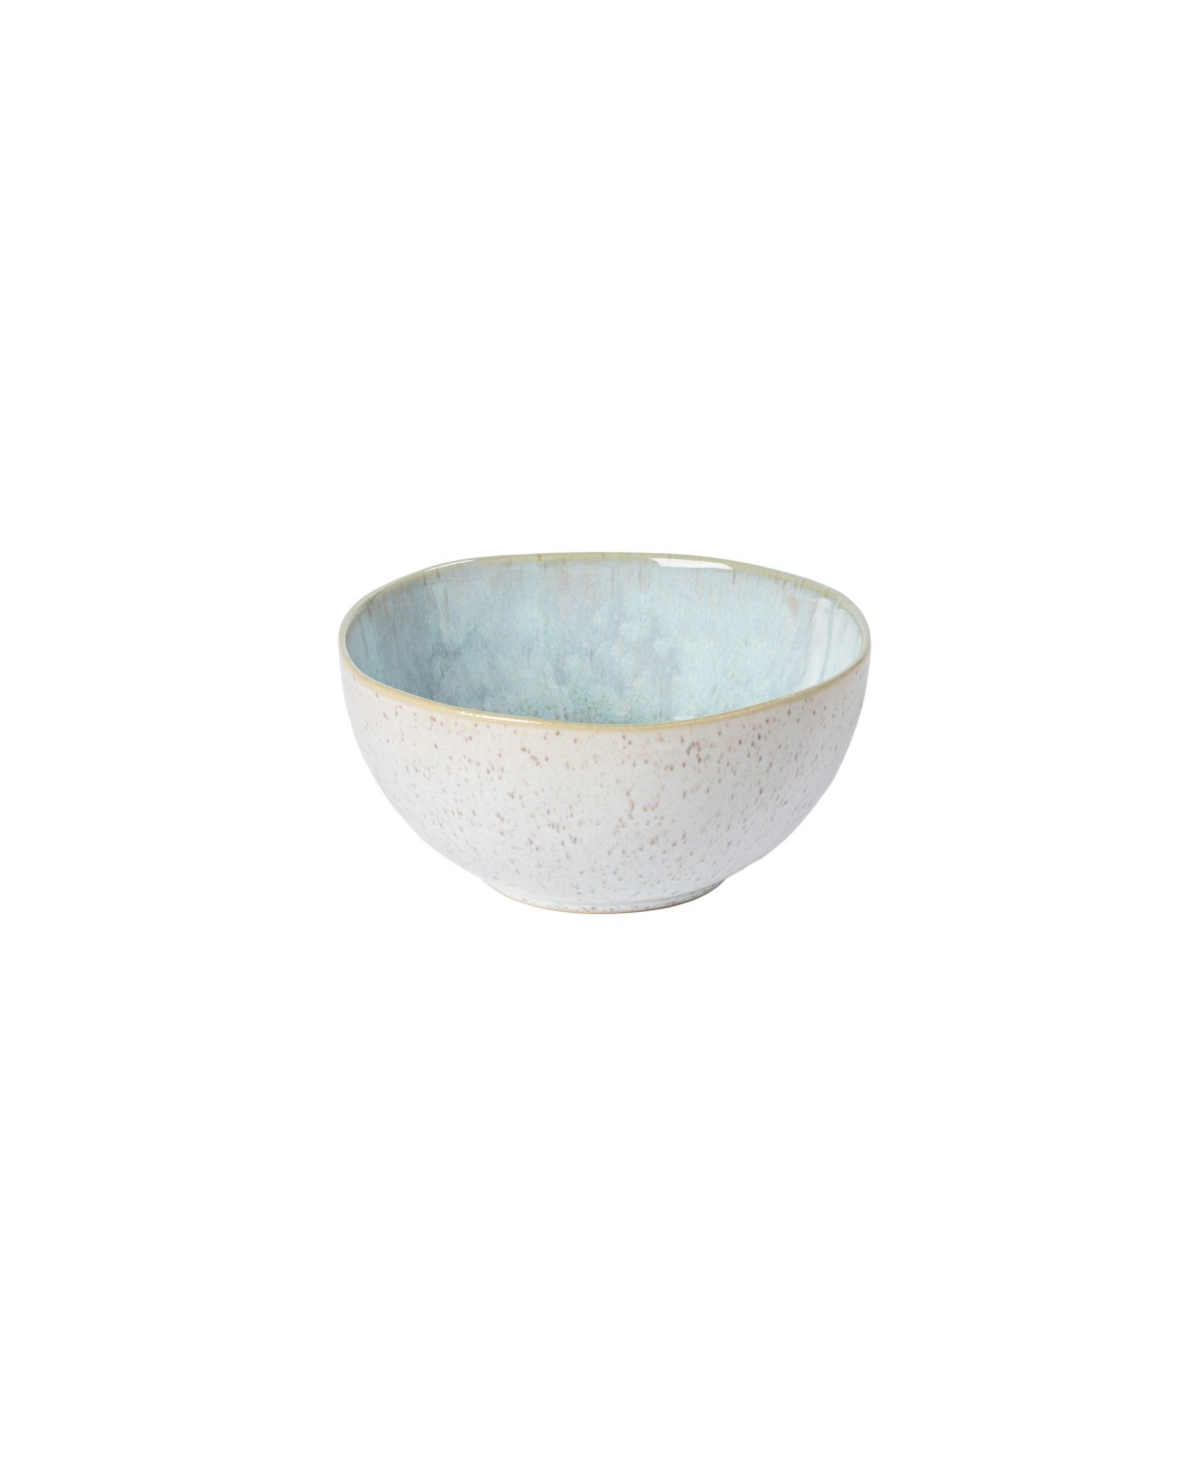 Eivissa 6" Soup, Cereal Bowl - Light Blue